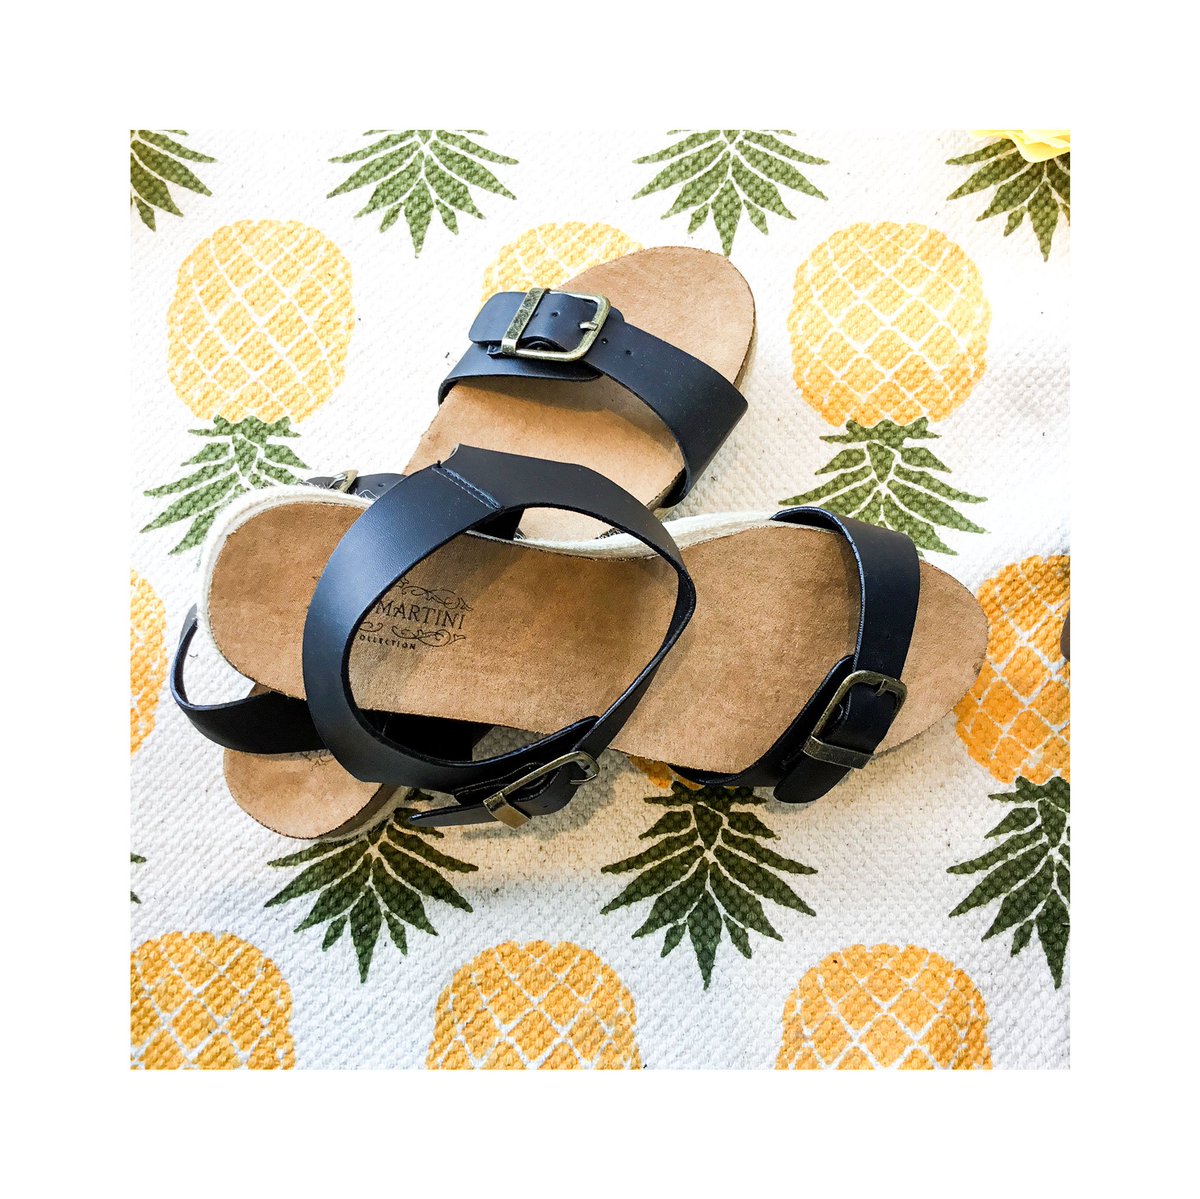 The Lake Walk Sandal is that type of shoe that you must have for the Summer times! 
.
#summergoals #lakebabe #summerfun #behappy  #sandals #lakewalk #whattheshoe #ootdshoe #ilovesandals #lakevibes #liketoknowit #lovetheshoe #summerize #toronto #torontoboutique #boutiqueshoes